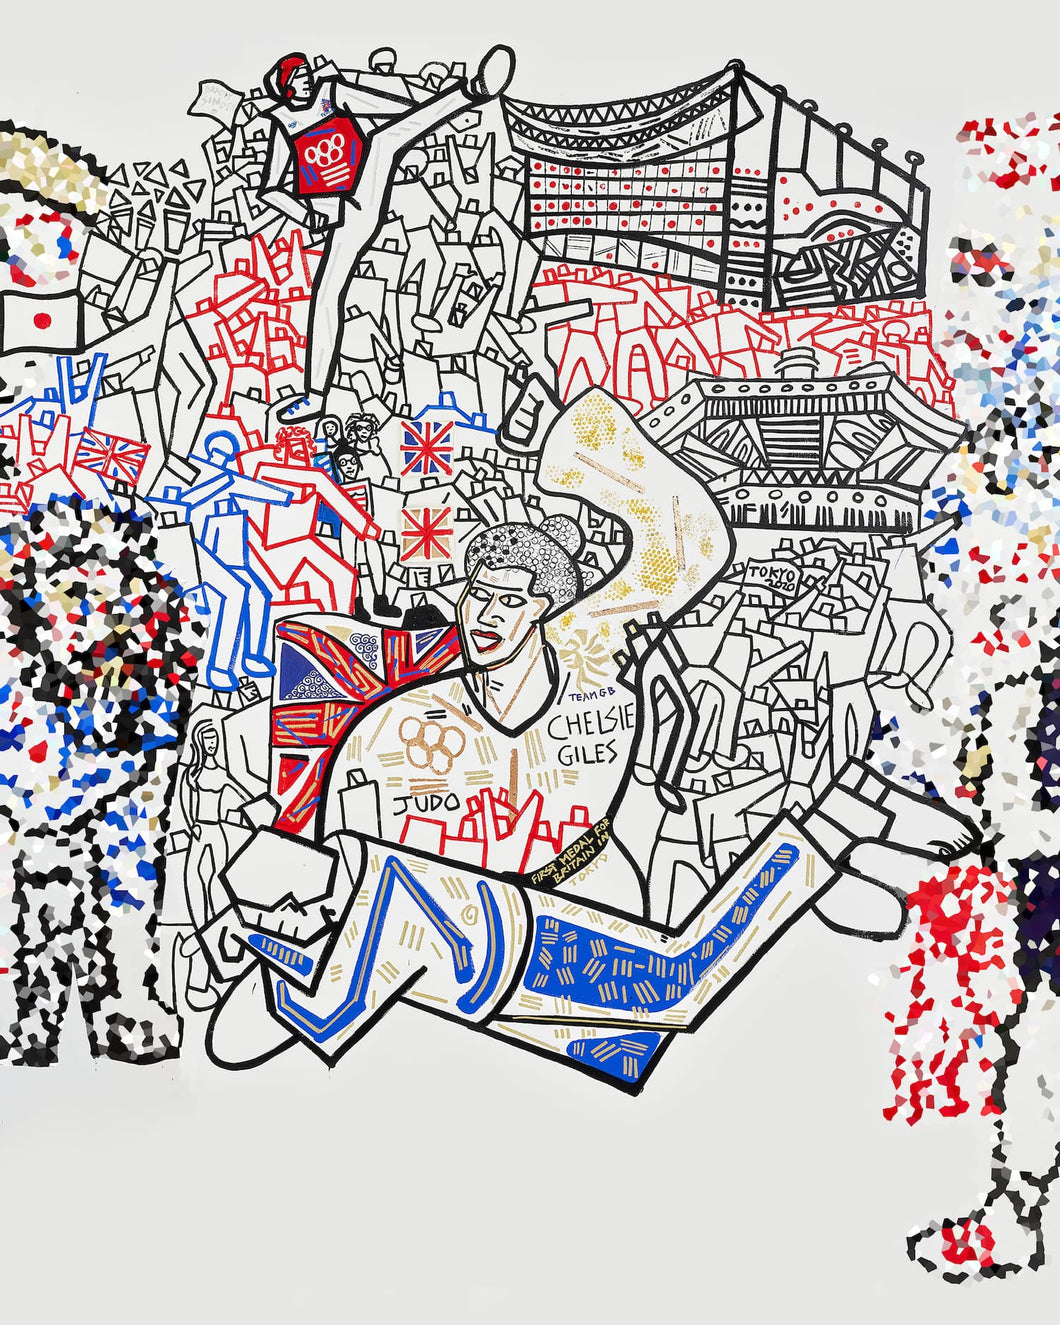 Ben Mosley's Tokyo 2020 Mural – 25th July 2021